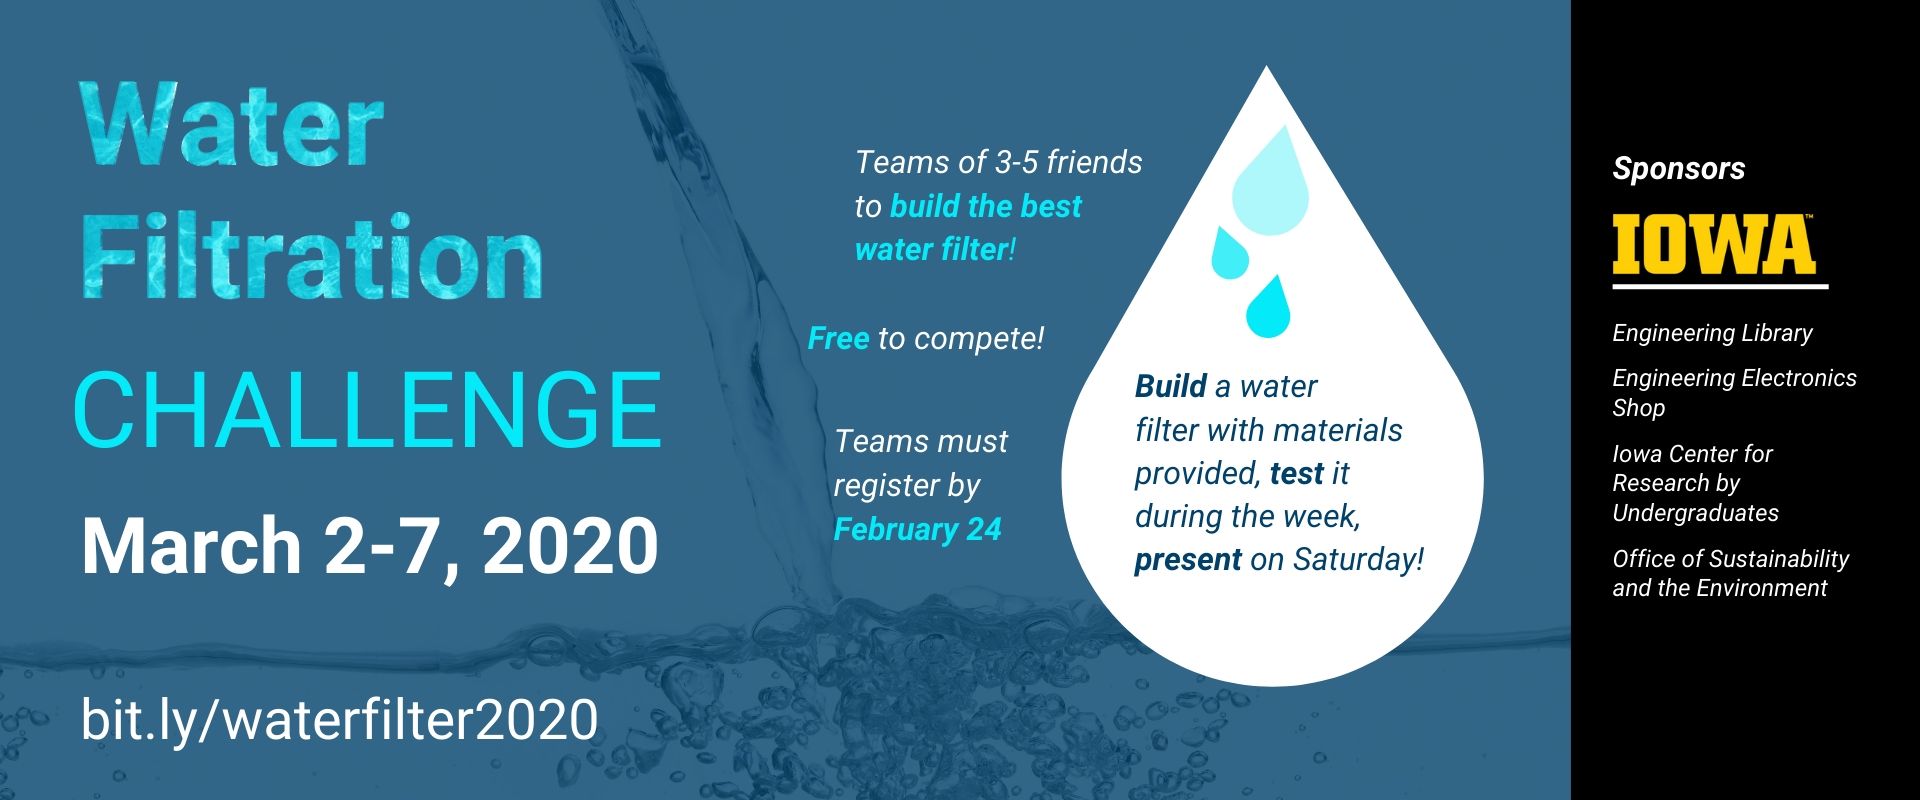 LIB_Water Filter Challenge